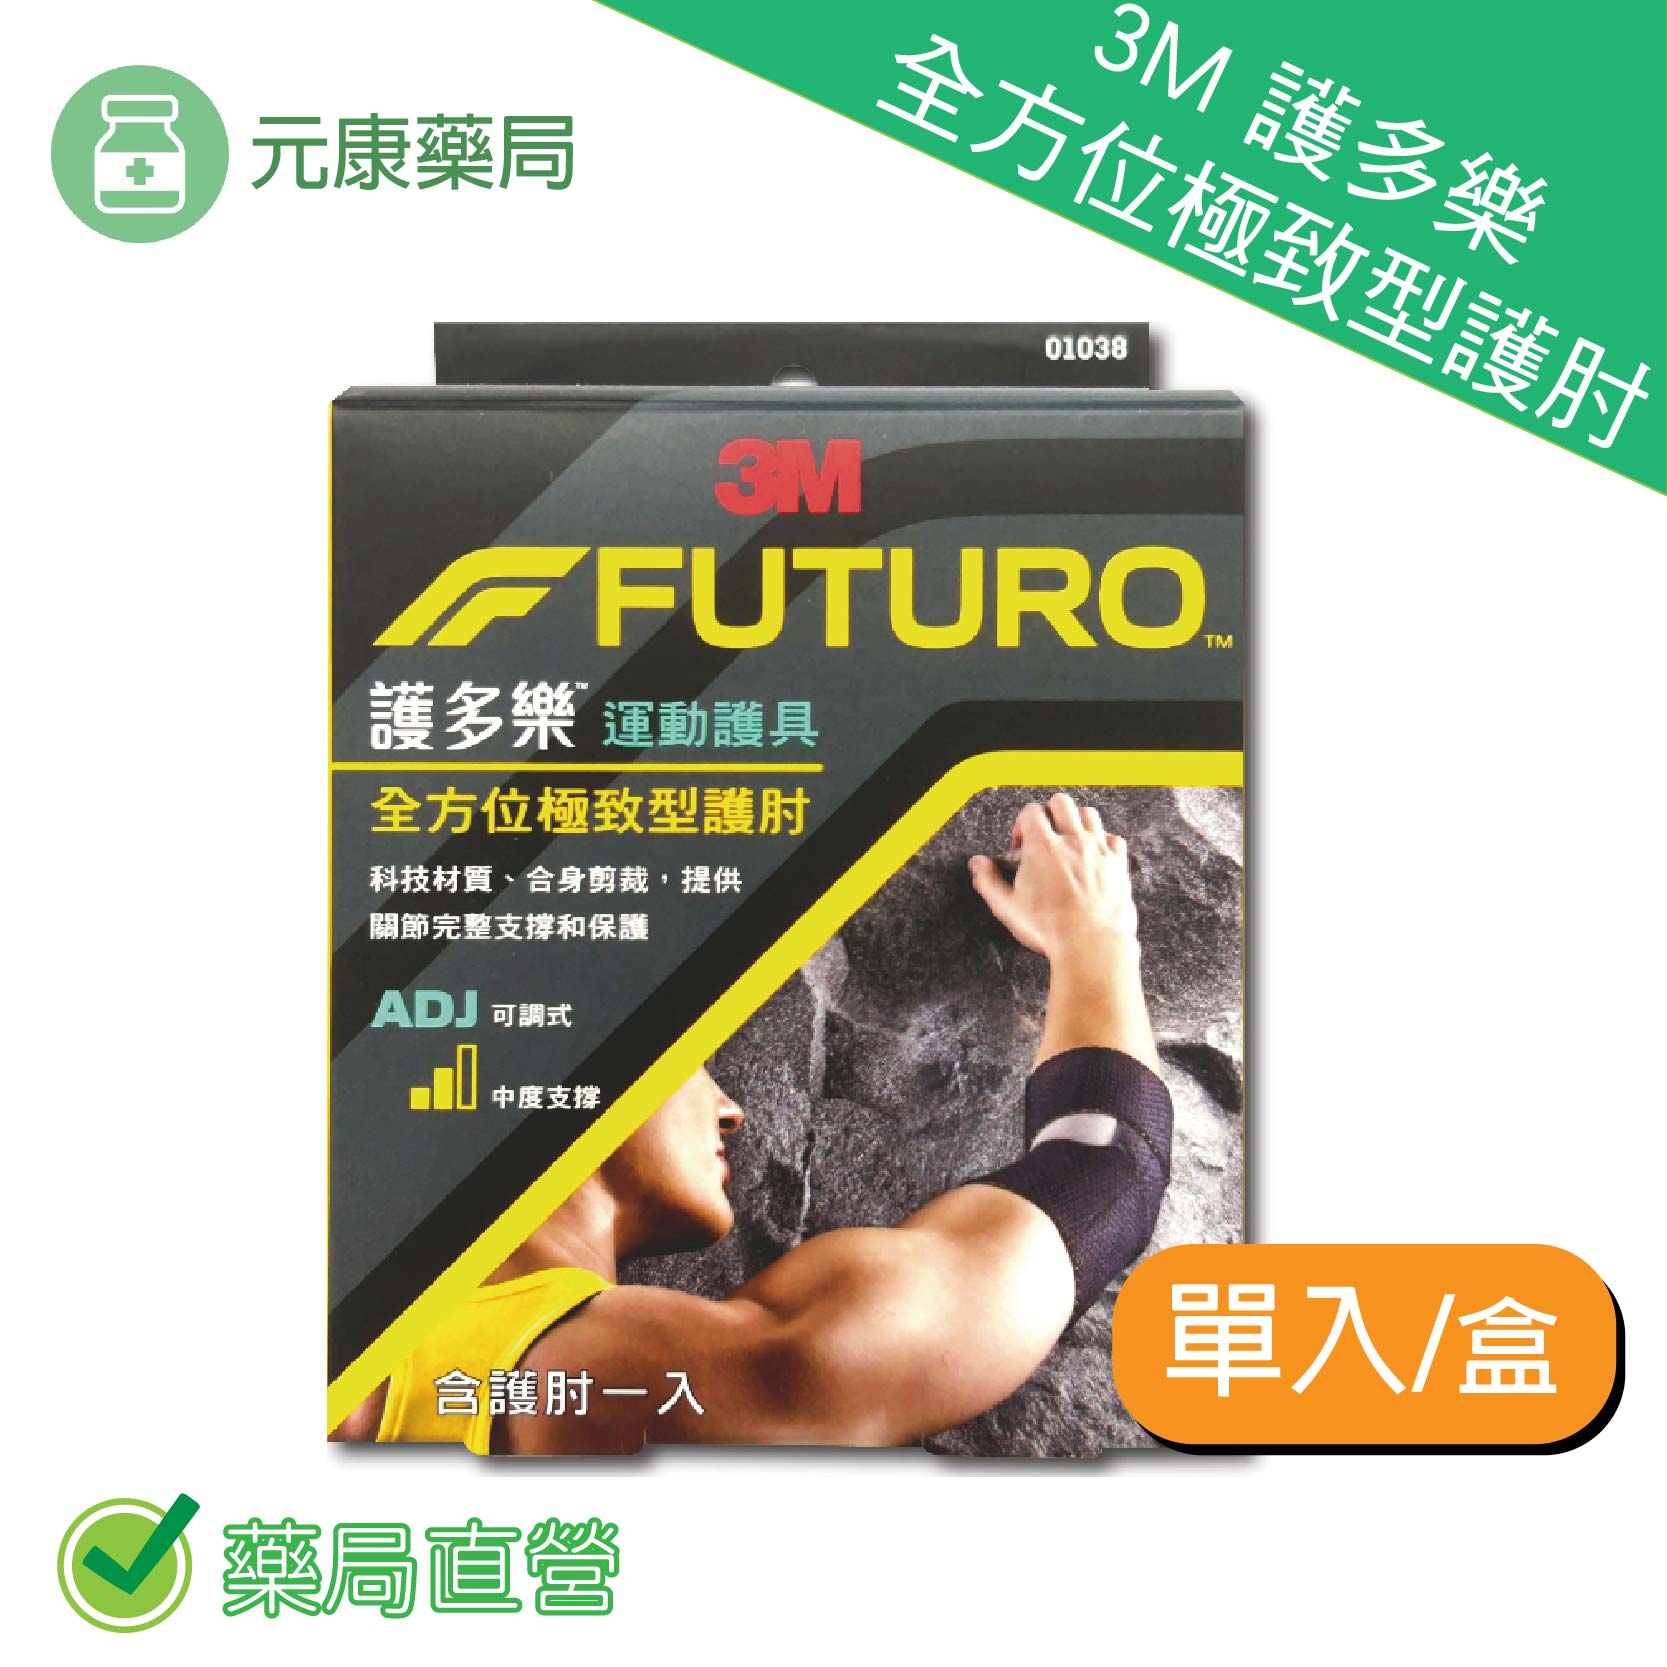 3M FUTURO 護多樂全方位極致型護肘單入/盒 可調式 中度支撐 台灣公司貨